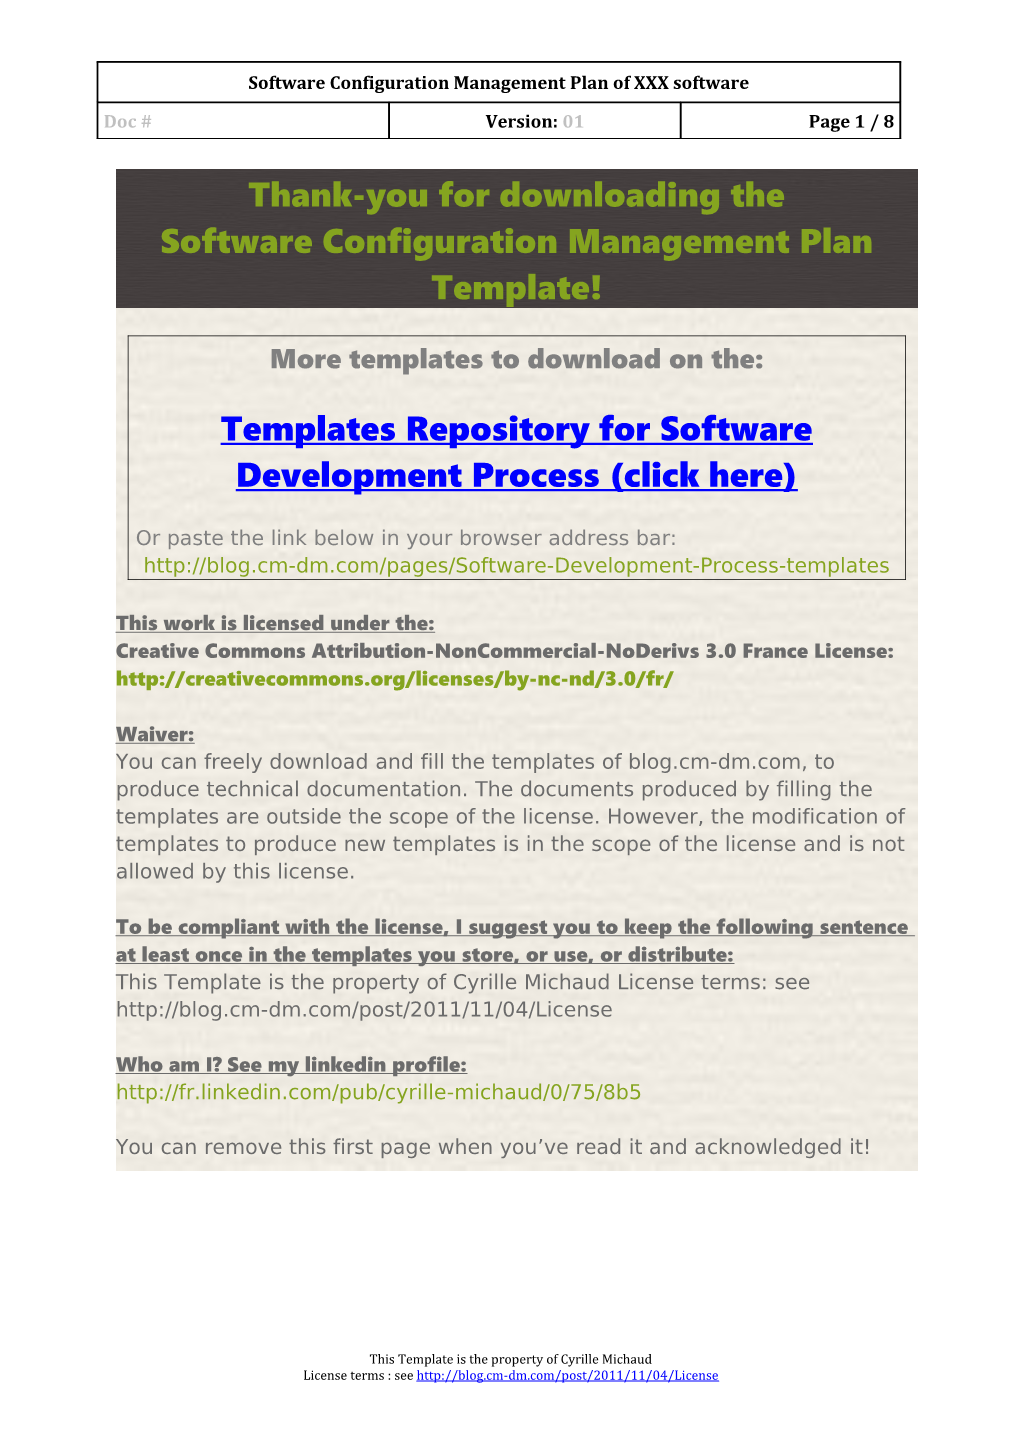 Software Configuration Management Plan Template